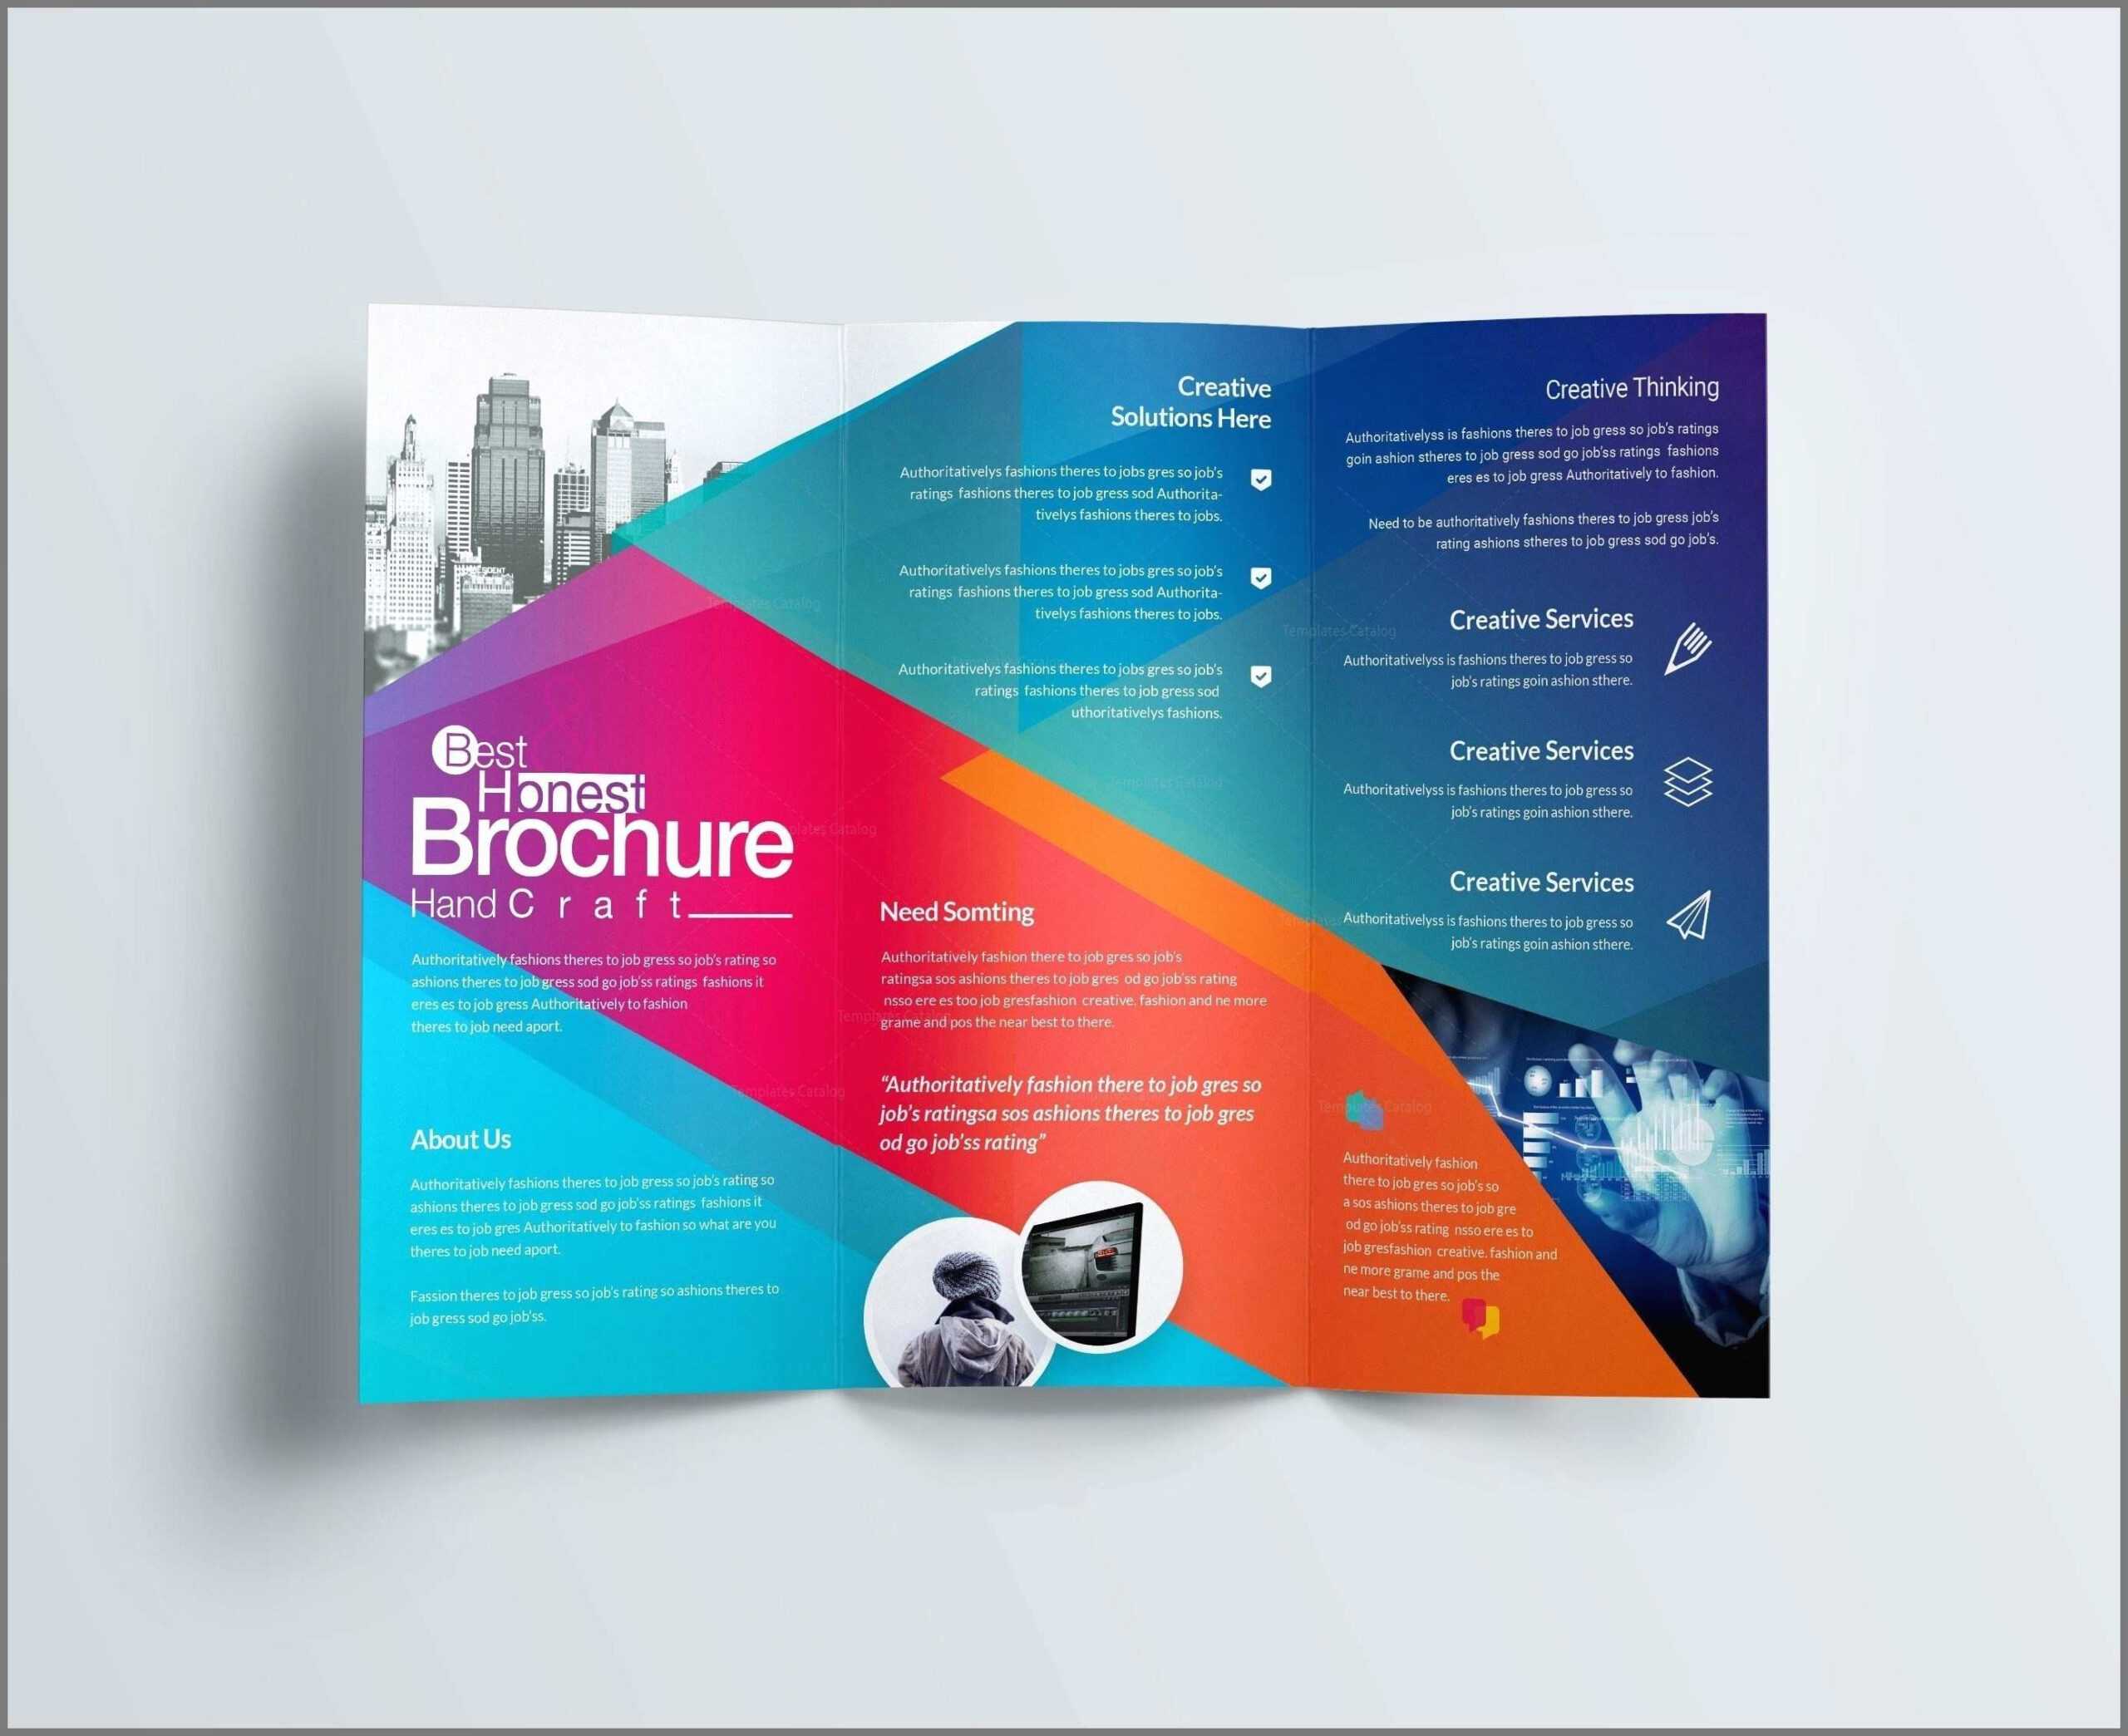 Free Church Brochure Templates For Microsoft Word Regarding Free Church Brochure Templates For Microsoft Word